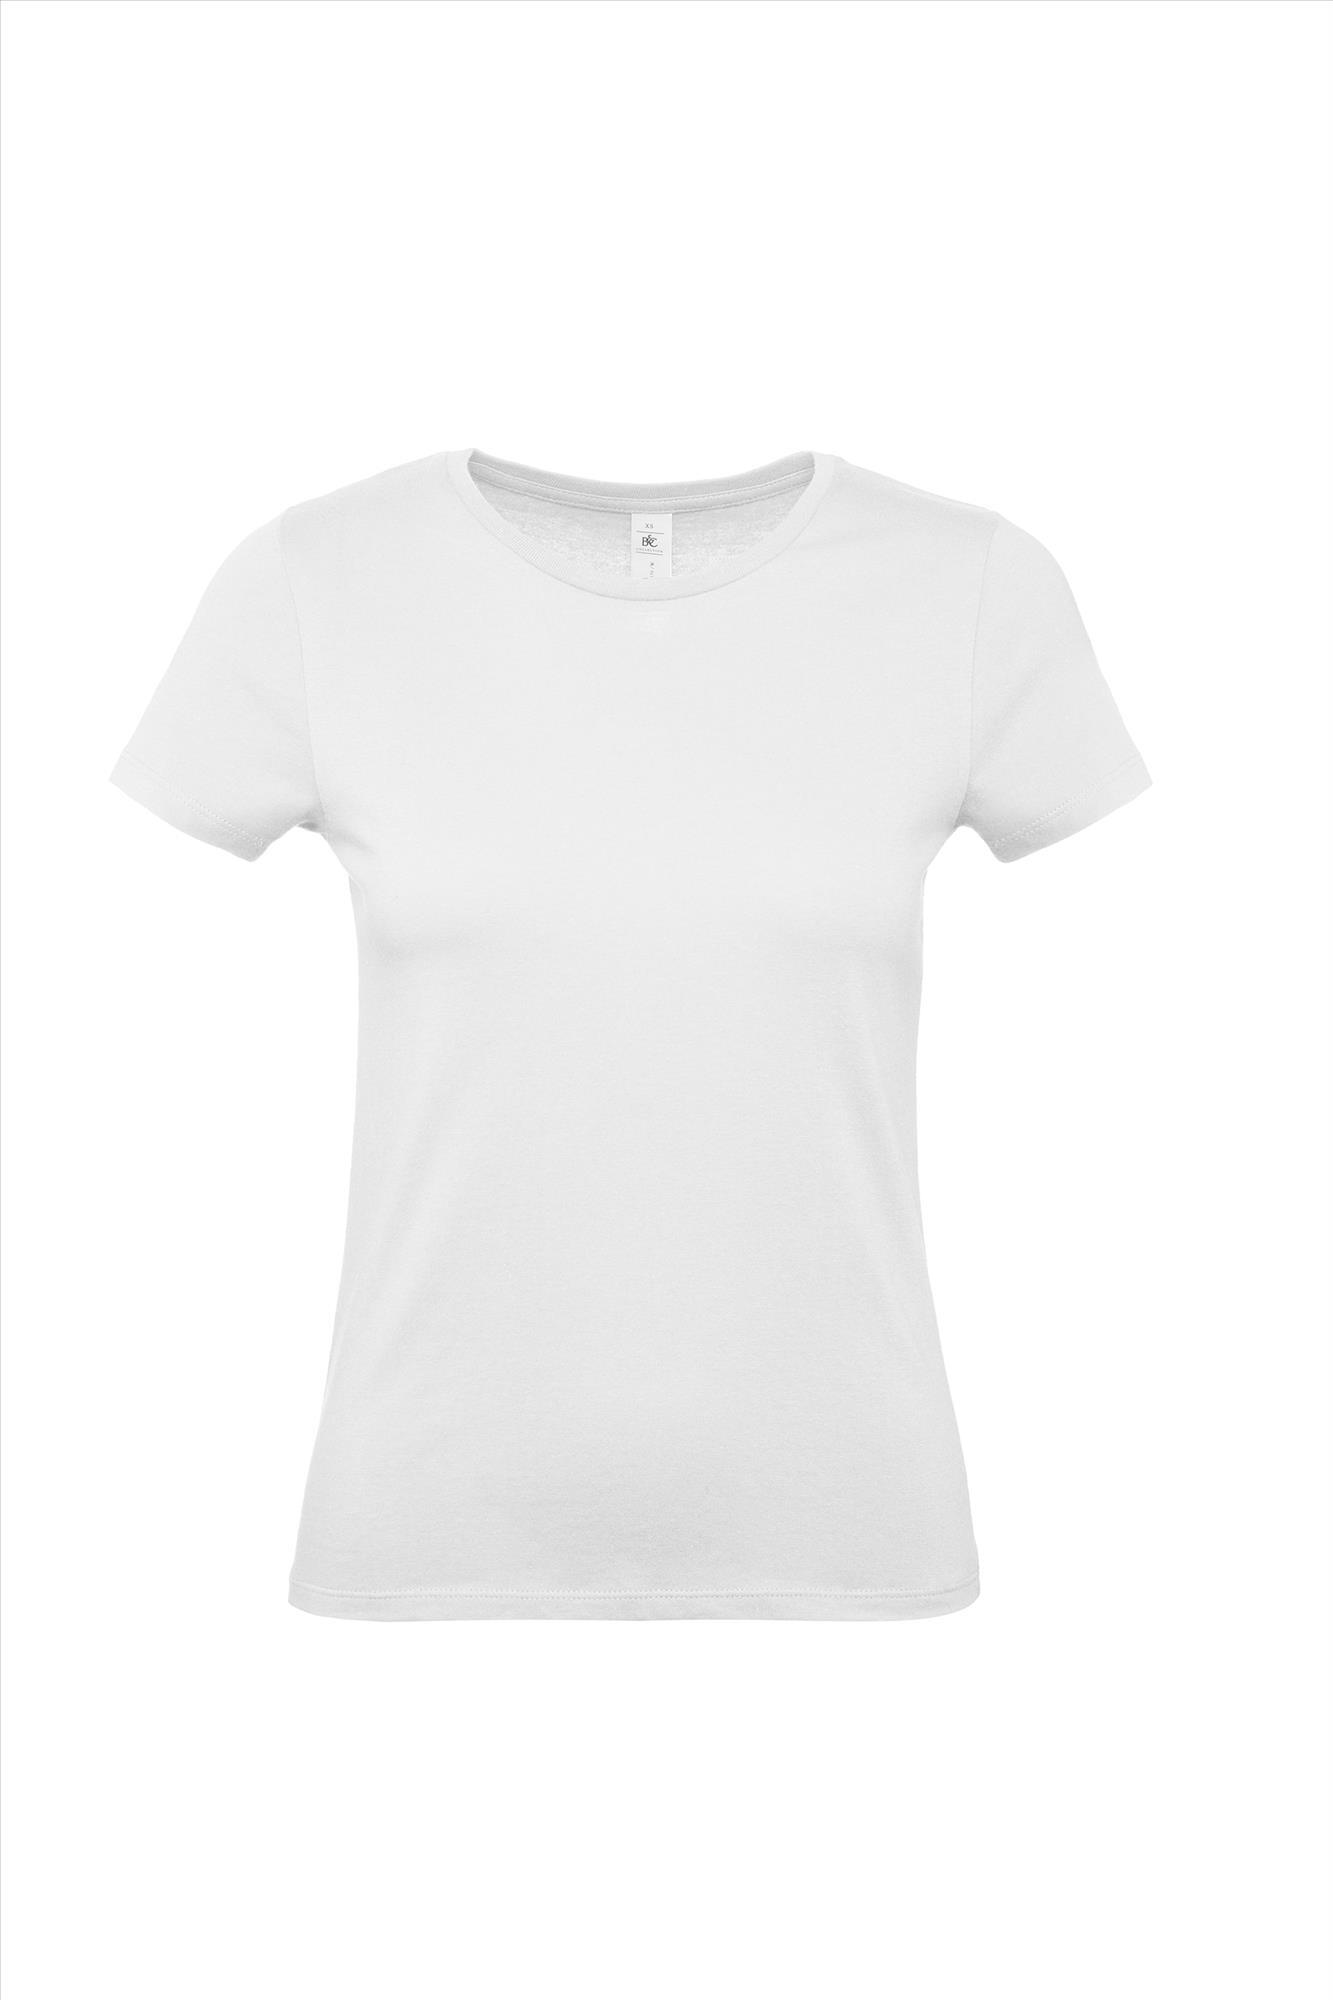 Modern T-shirt voor haar dames shirt wit